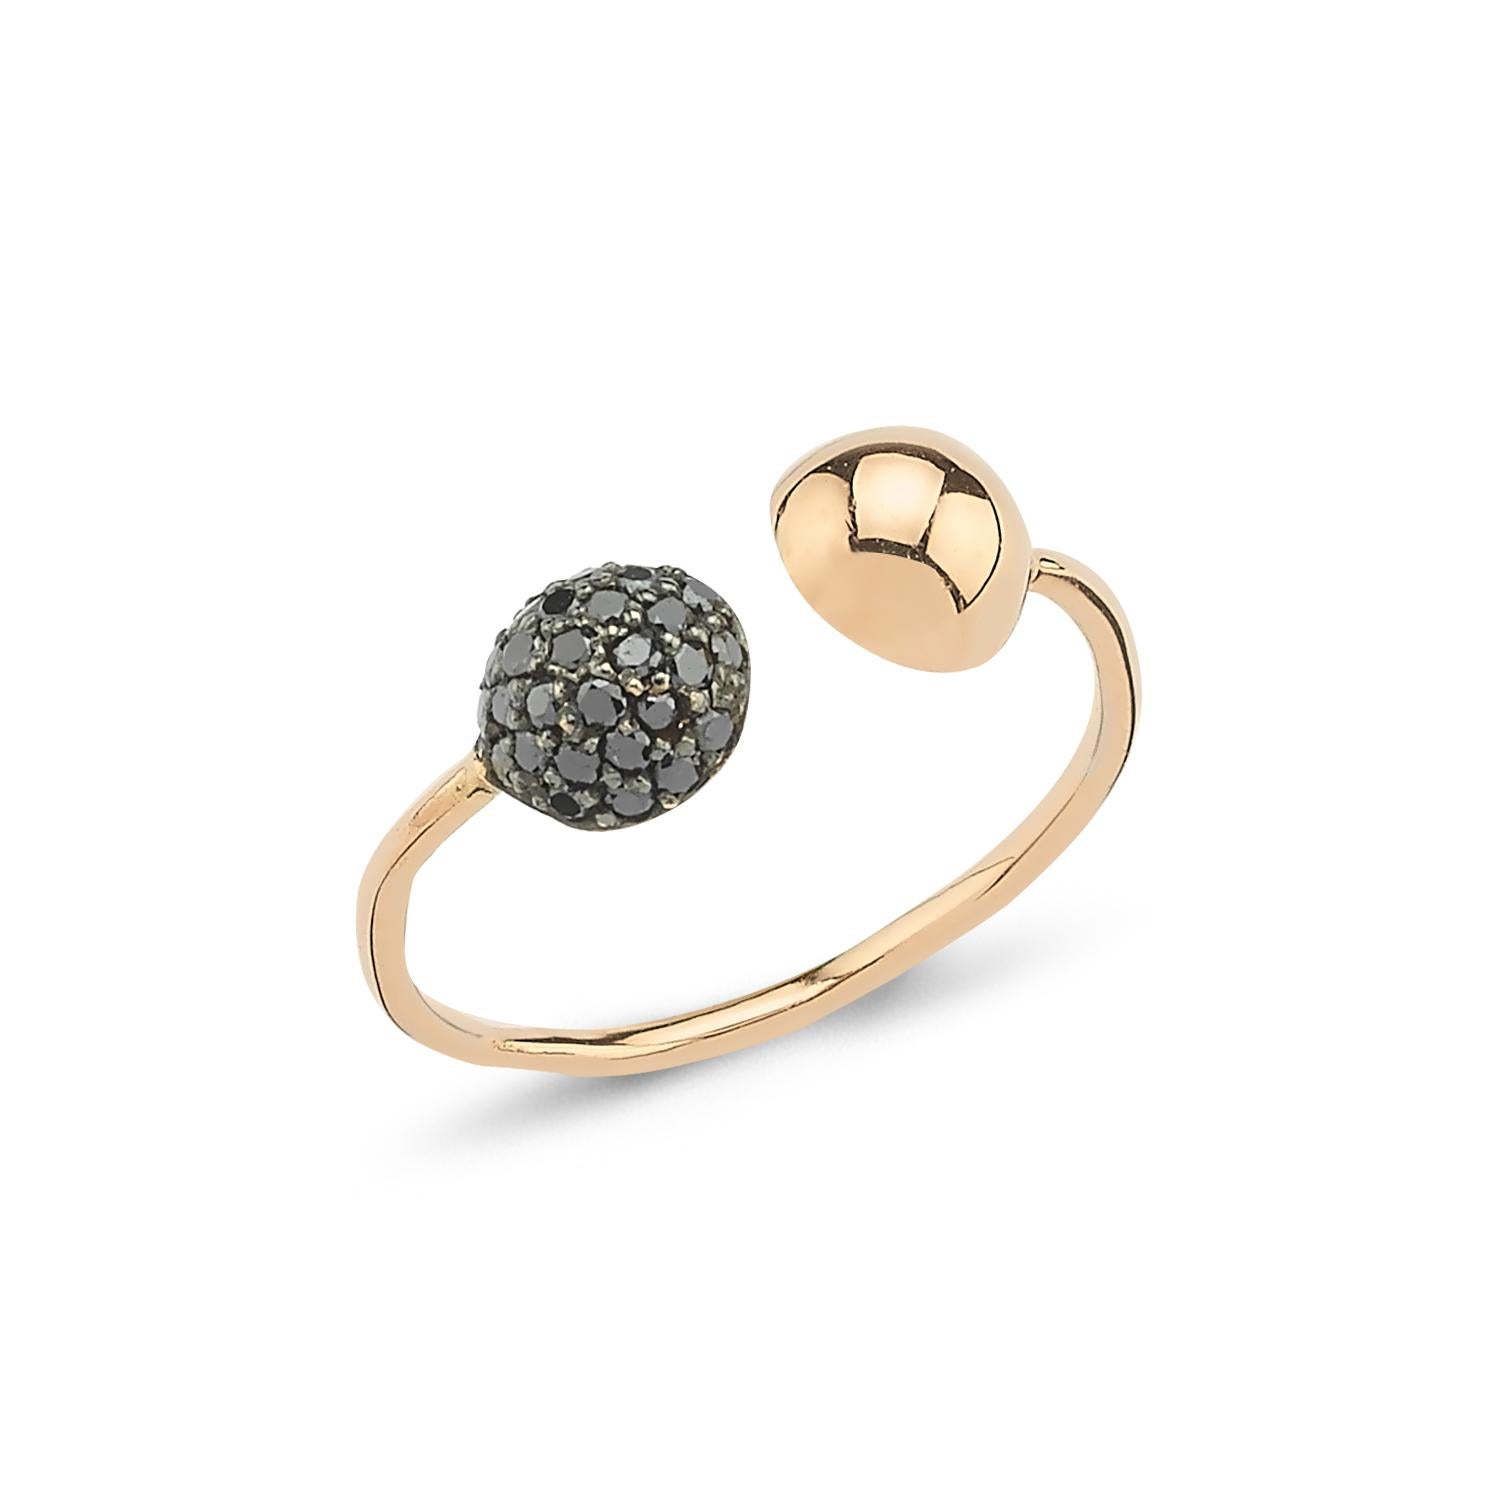 Two balls black diamond ring in rose gold with black diamond by Selda Jewellery

Additional Information:-
Collection: Waves Collection
14k Rose gold
0.1ct Black diamond